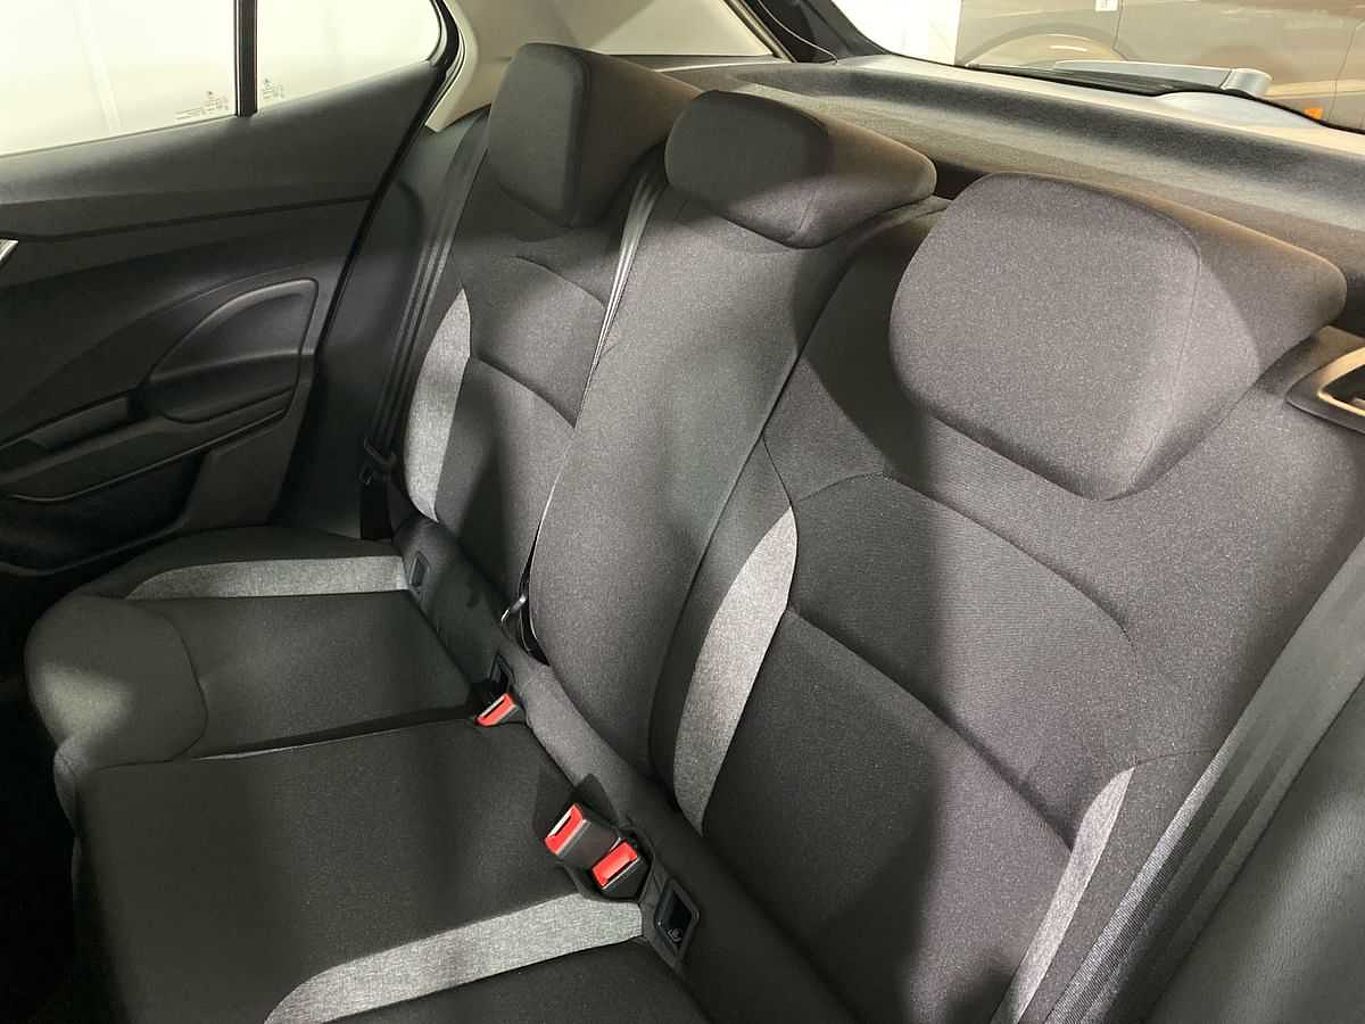 SKODA Fabia 1.0 TSI (109ps) SE Comfort 5-Dr Hatchback